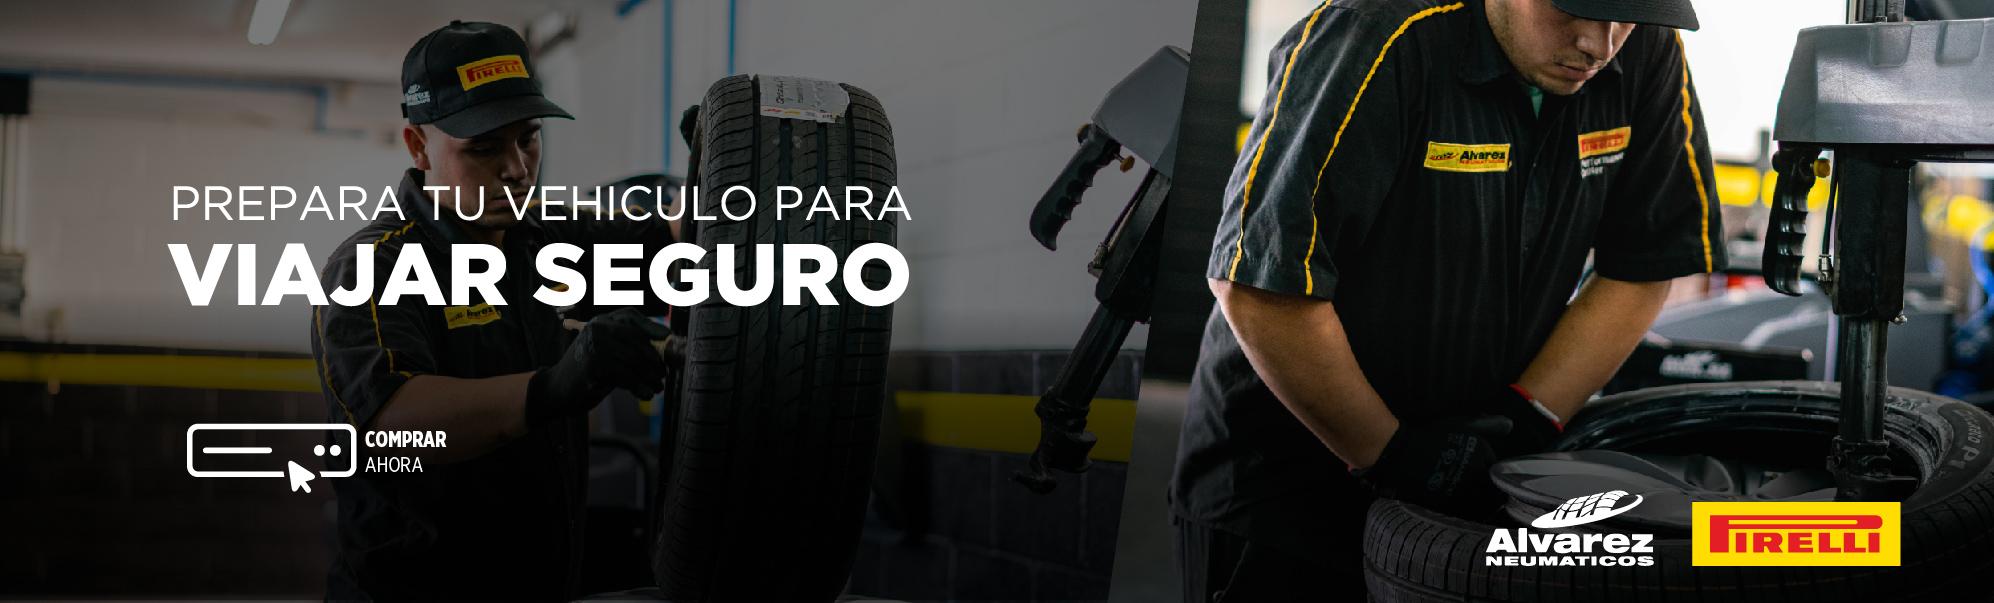 Viaja Seguro - Neumáticos Álvarez - Distribuidor Oficial Pirelli